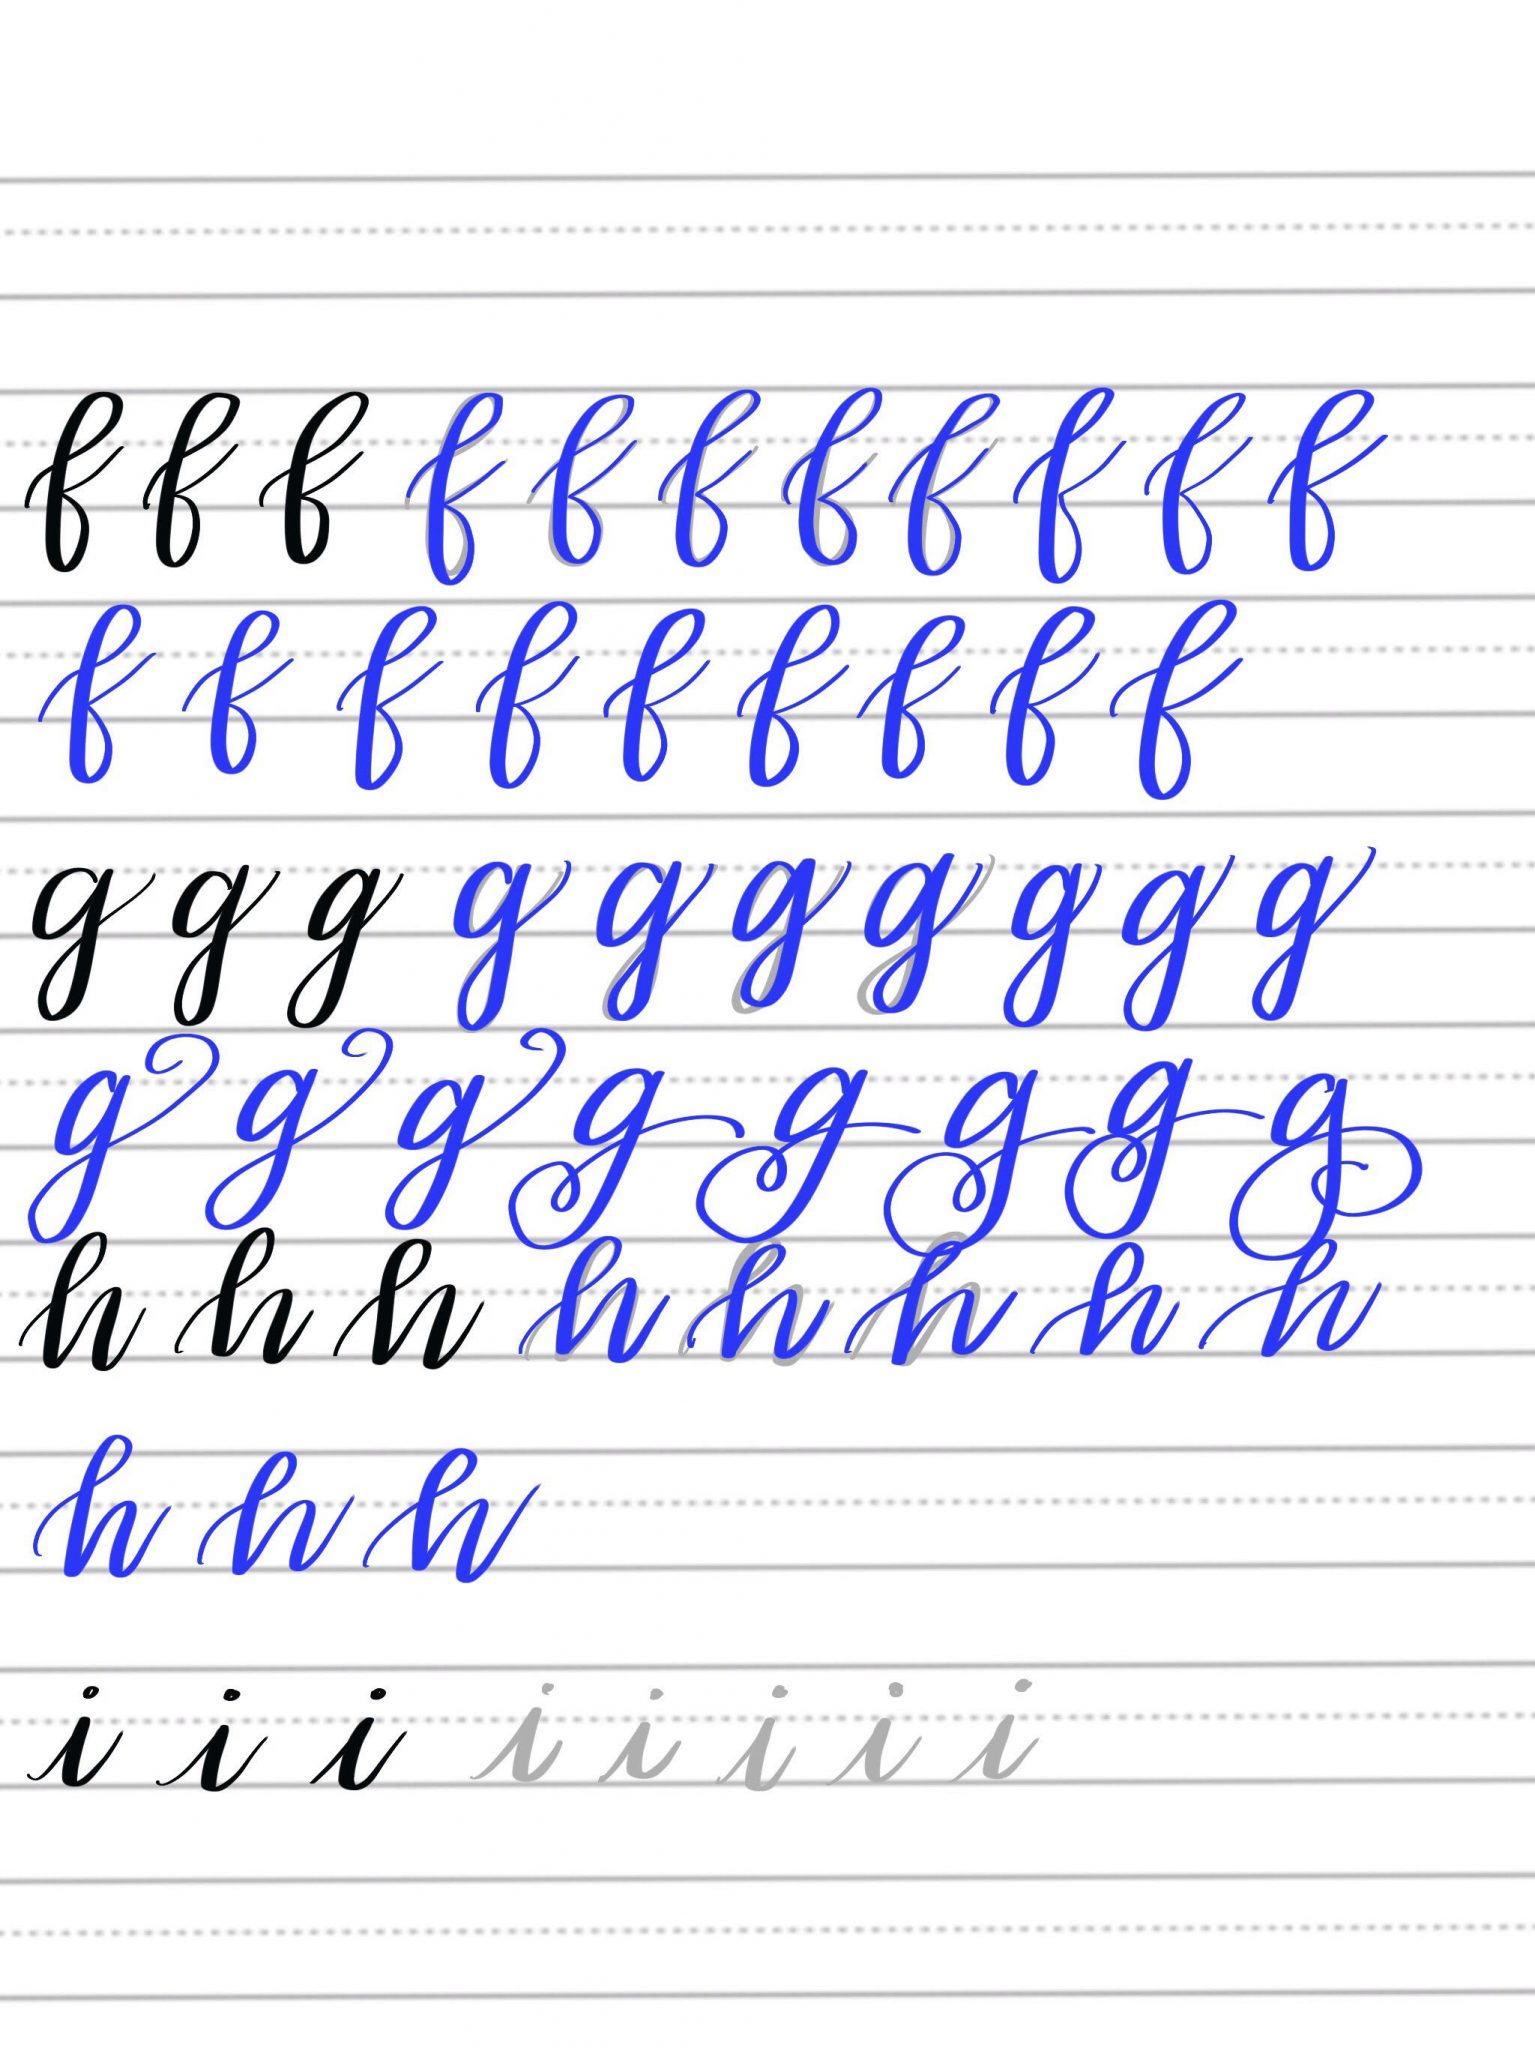 Free Brush Lettering Practice Sheets Lowercase Alphabet